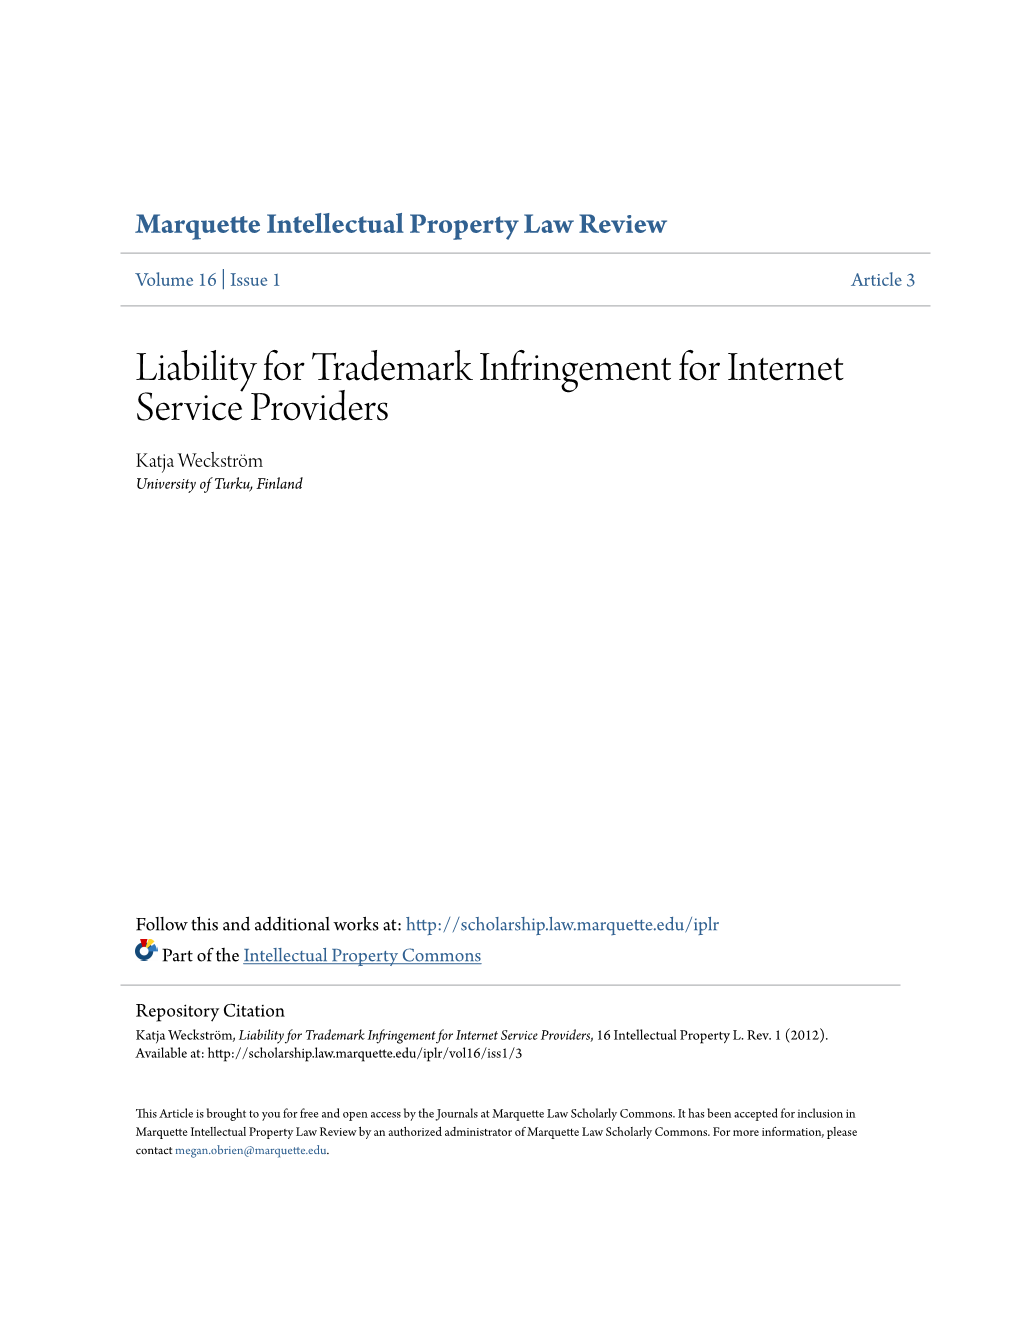 Liability for Trademark Infringement for Internet Service Providers Katja Weckström University of Turku, Finland